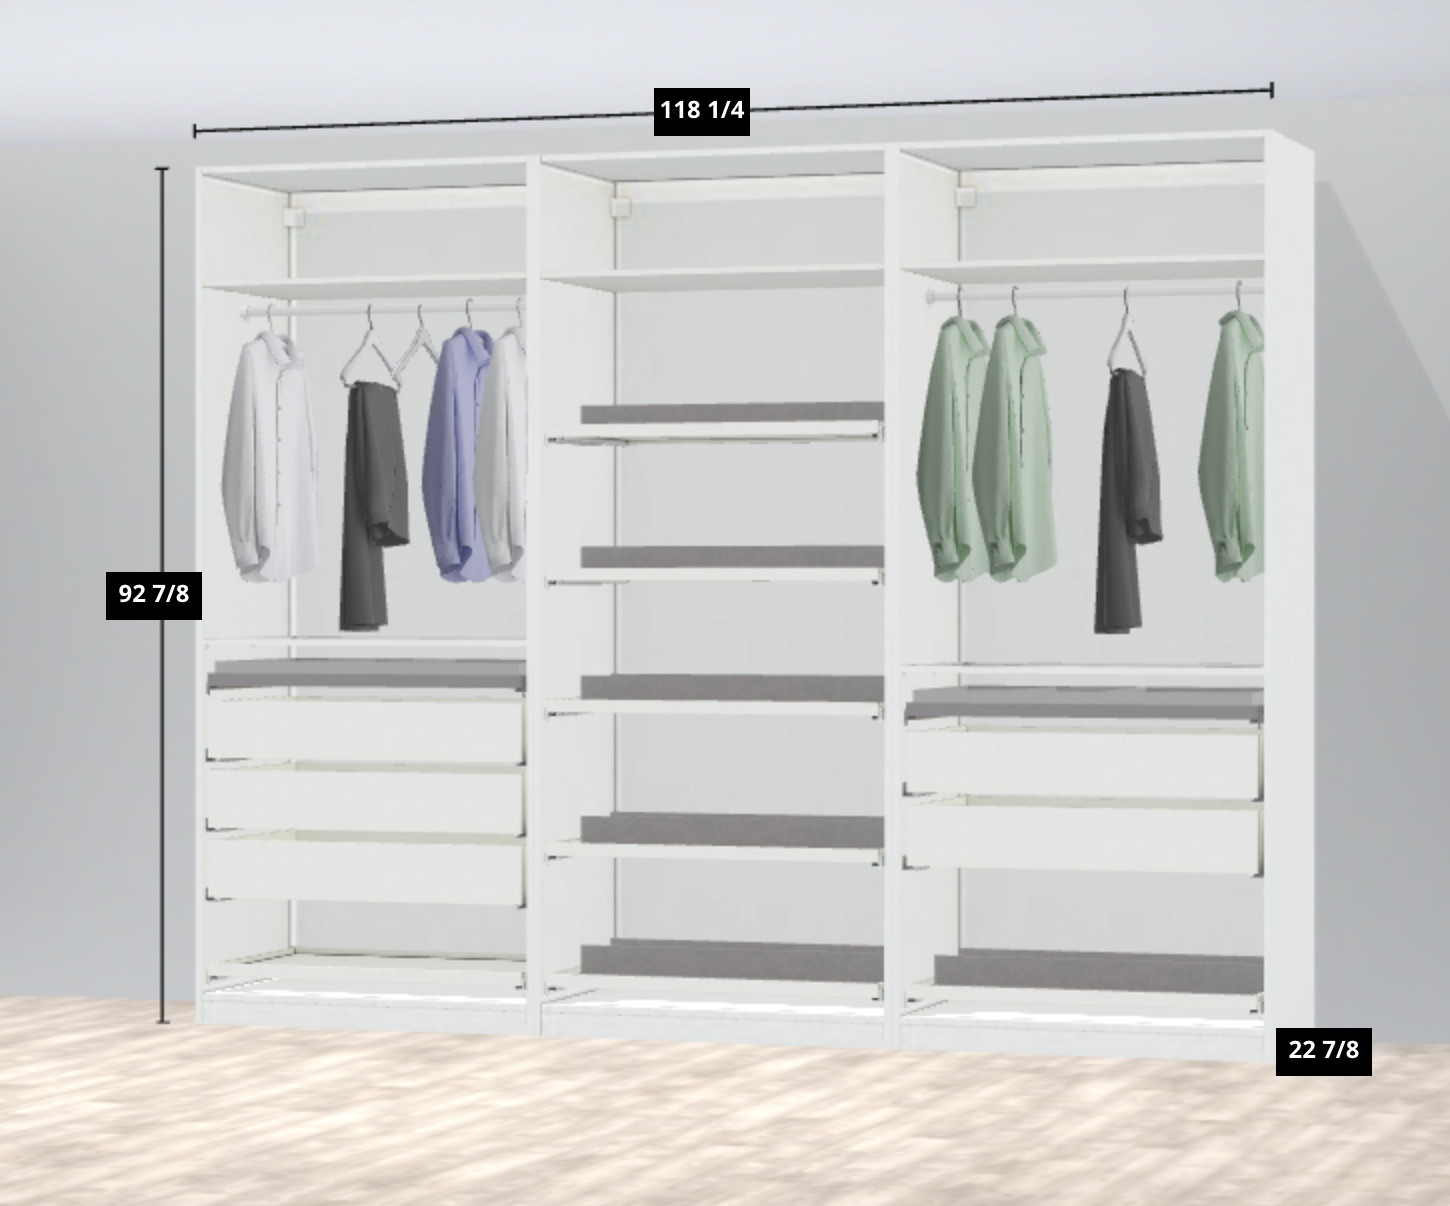 Kids Closet Organizer with IKEA Closet System - PAX system closet hack